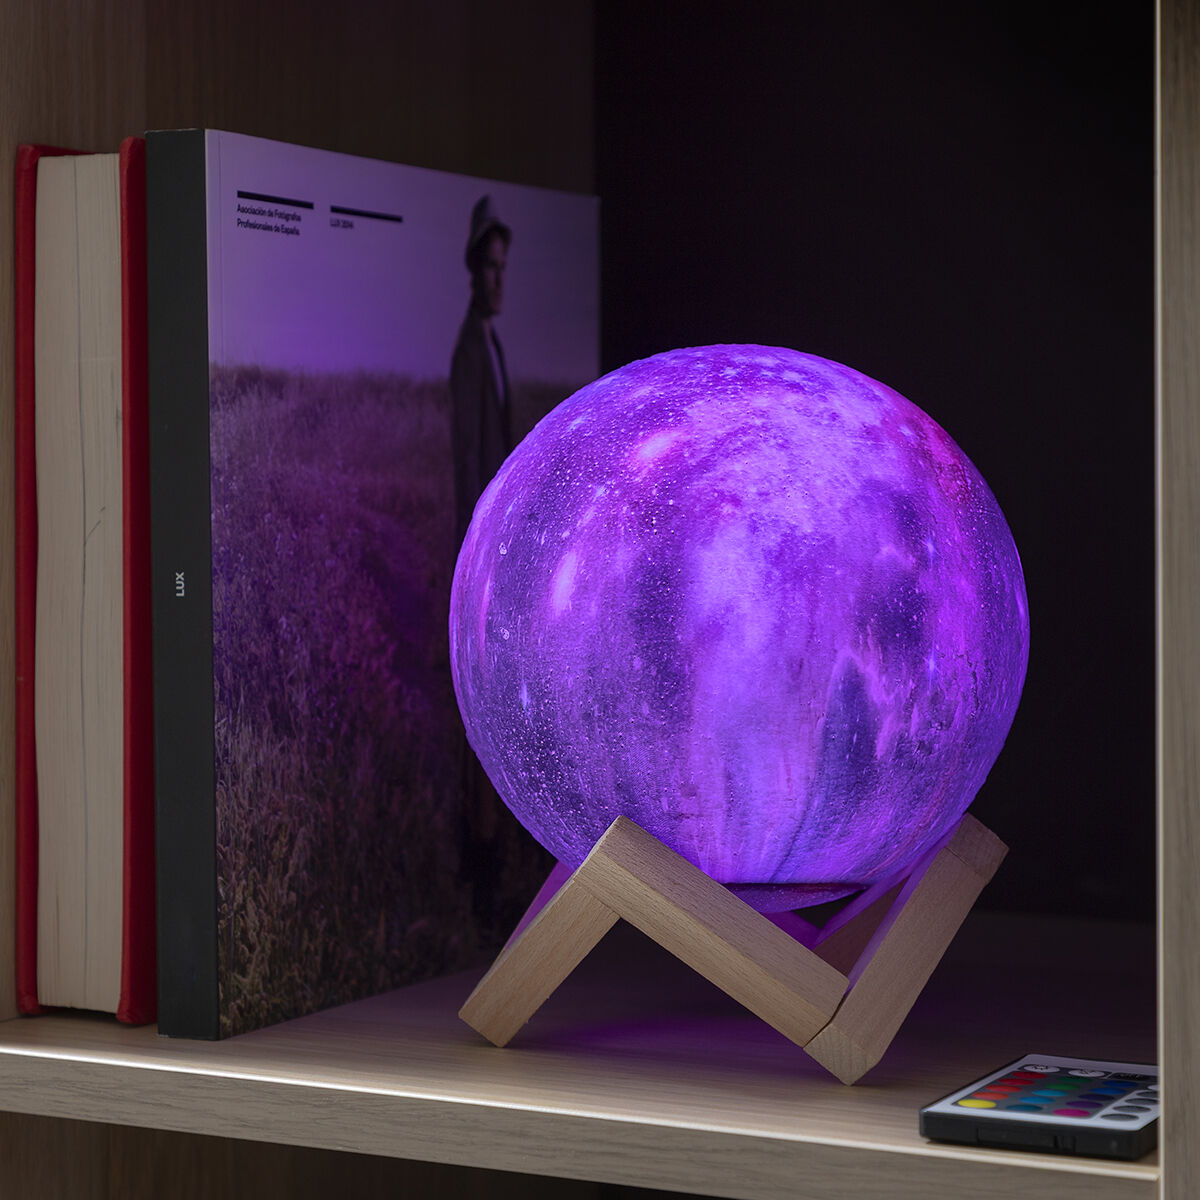 Kaufe Wiederaufladbare LED-Lampe Galaxie Galighty InnovaGoods bei AWK Flagship um € 31.00